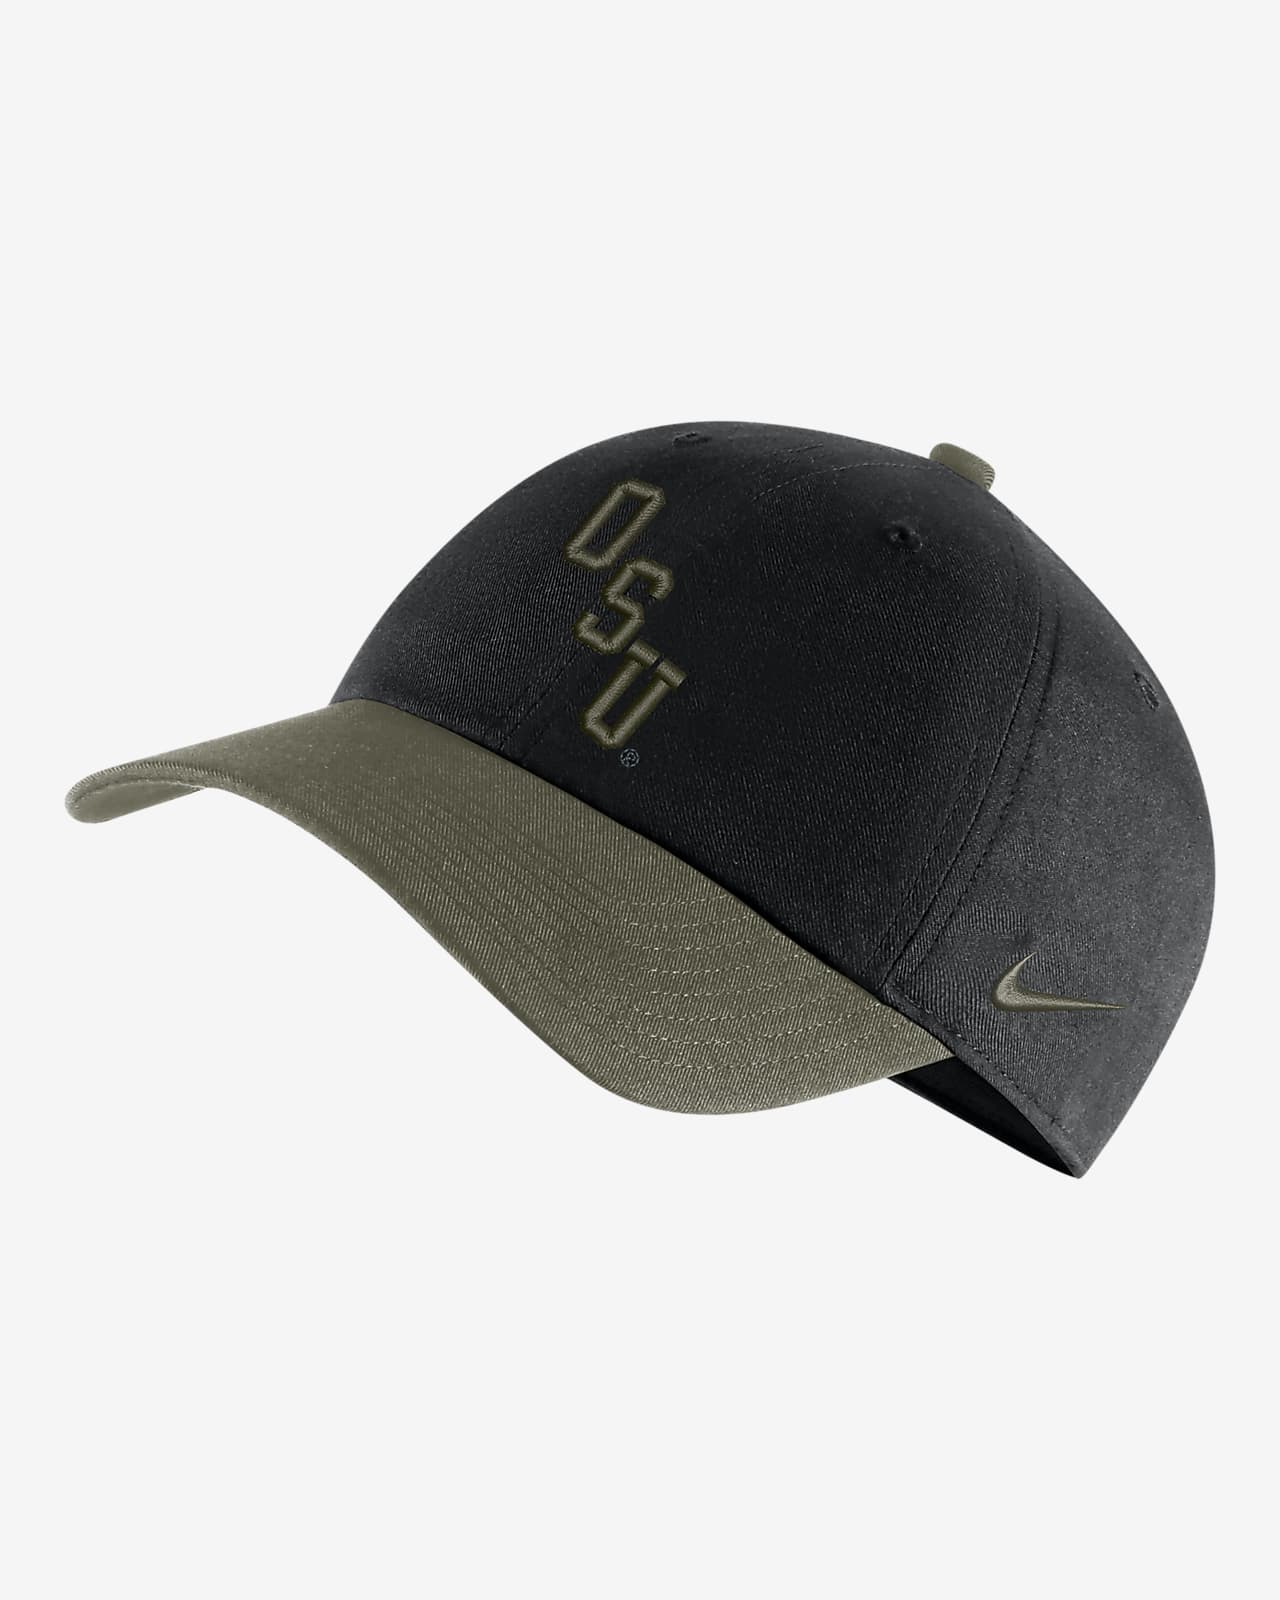 Oklahoma State Heritage86 Nike College Hat